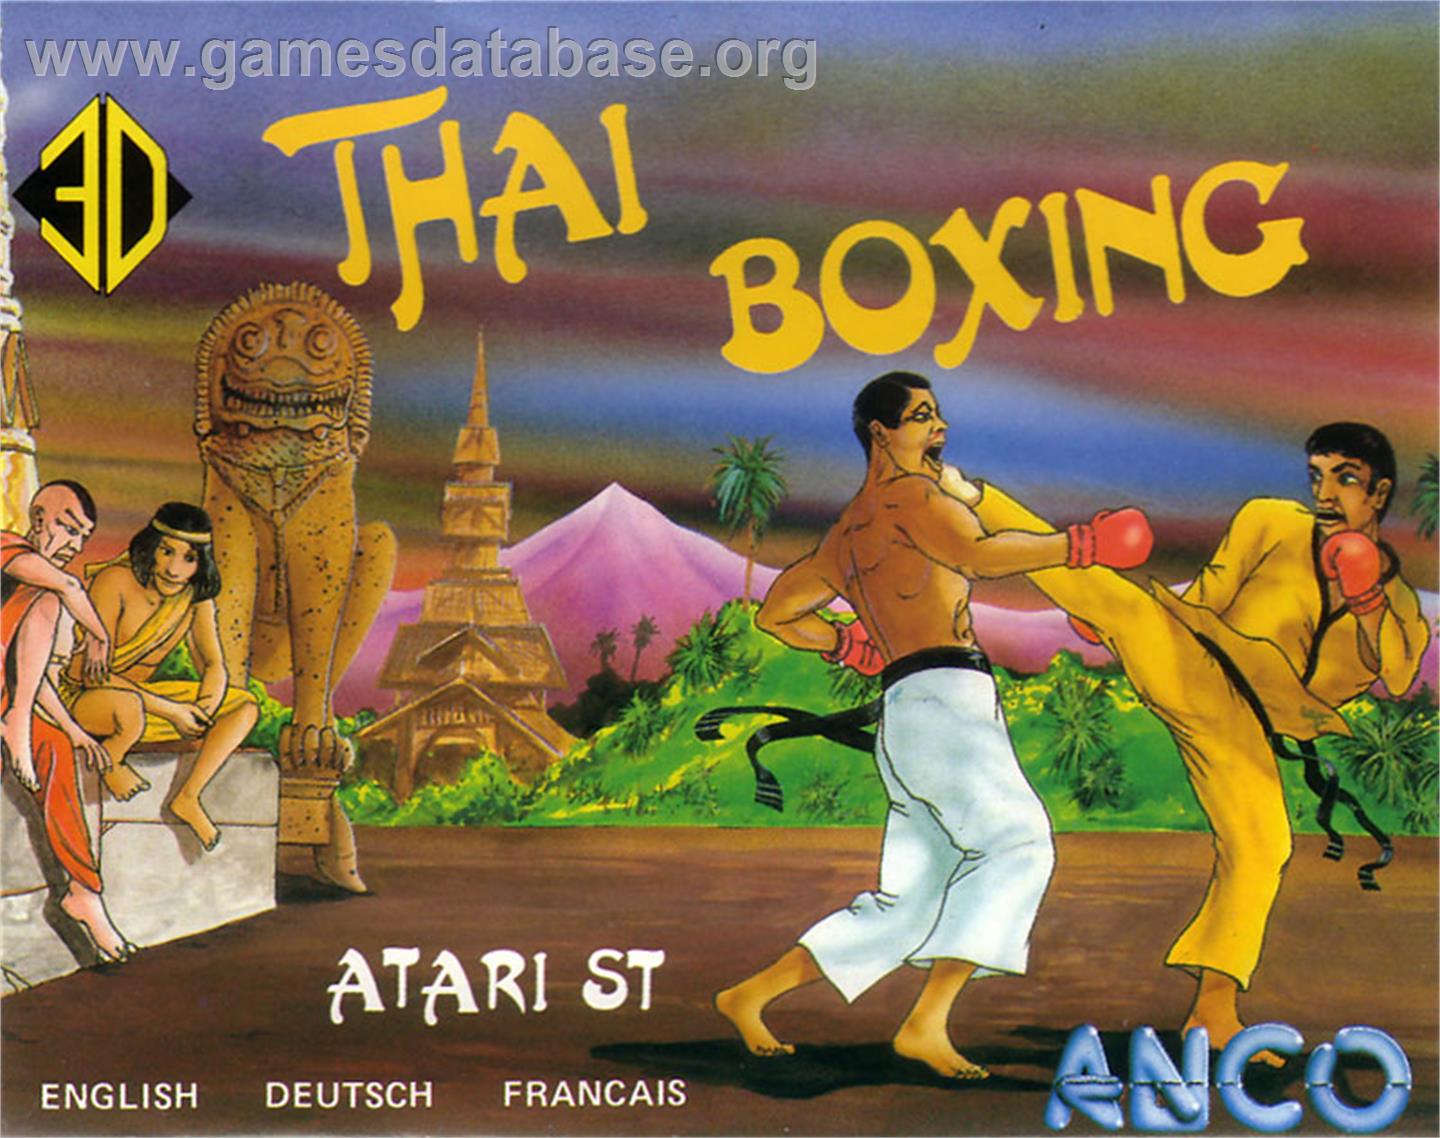 4D Boxing - Atari ST - Artwork - Box